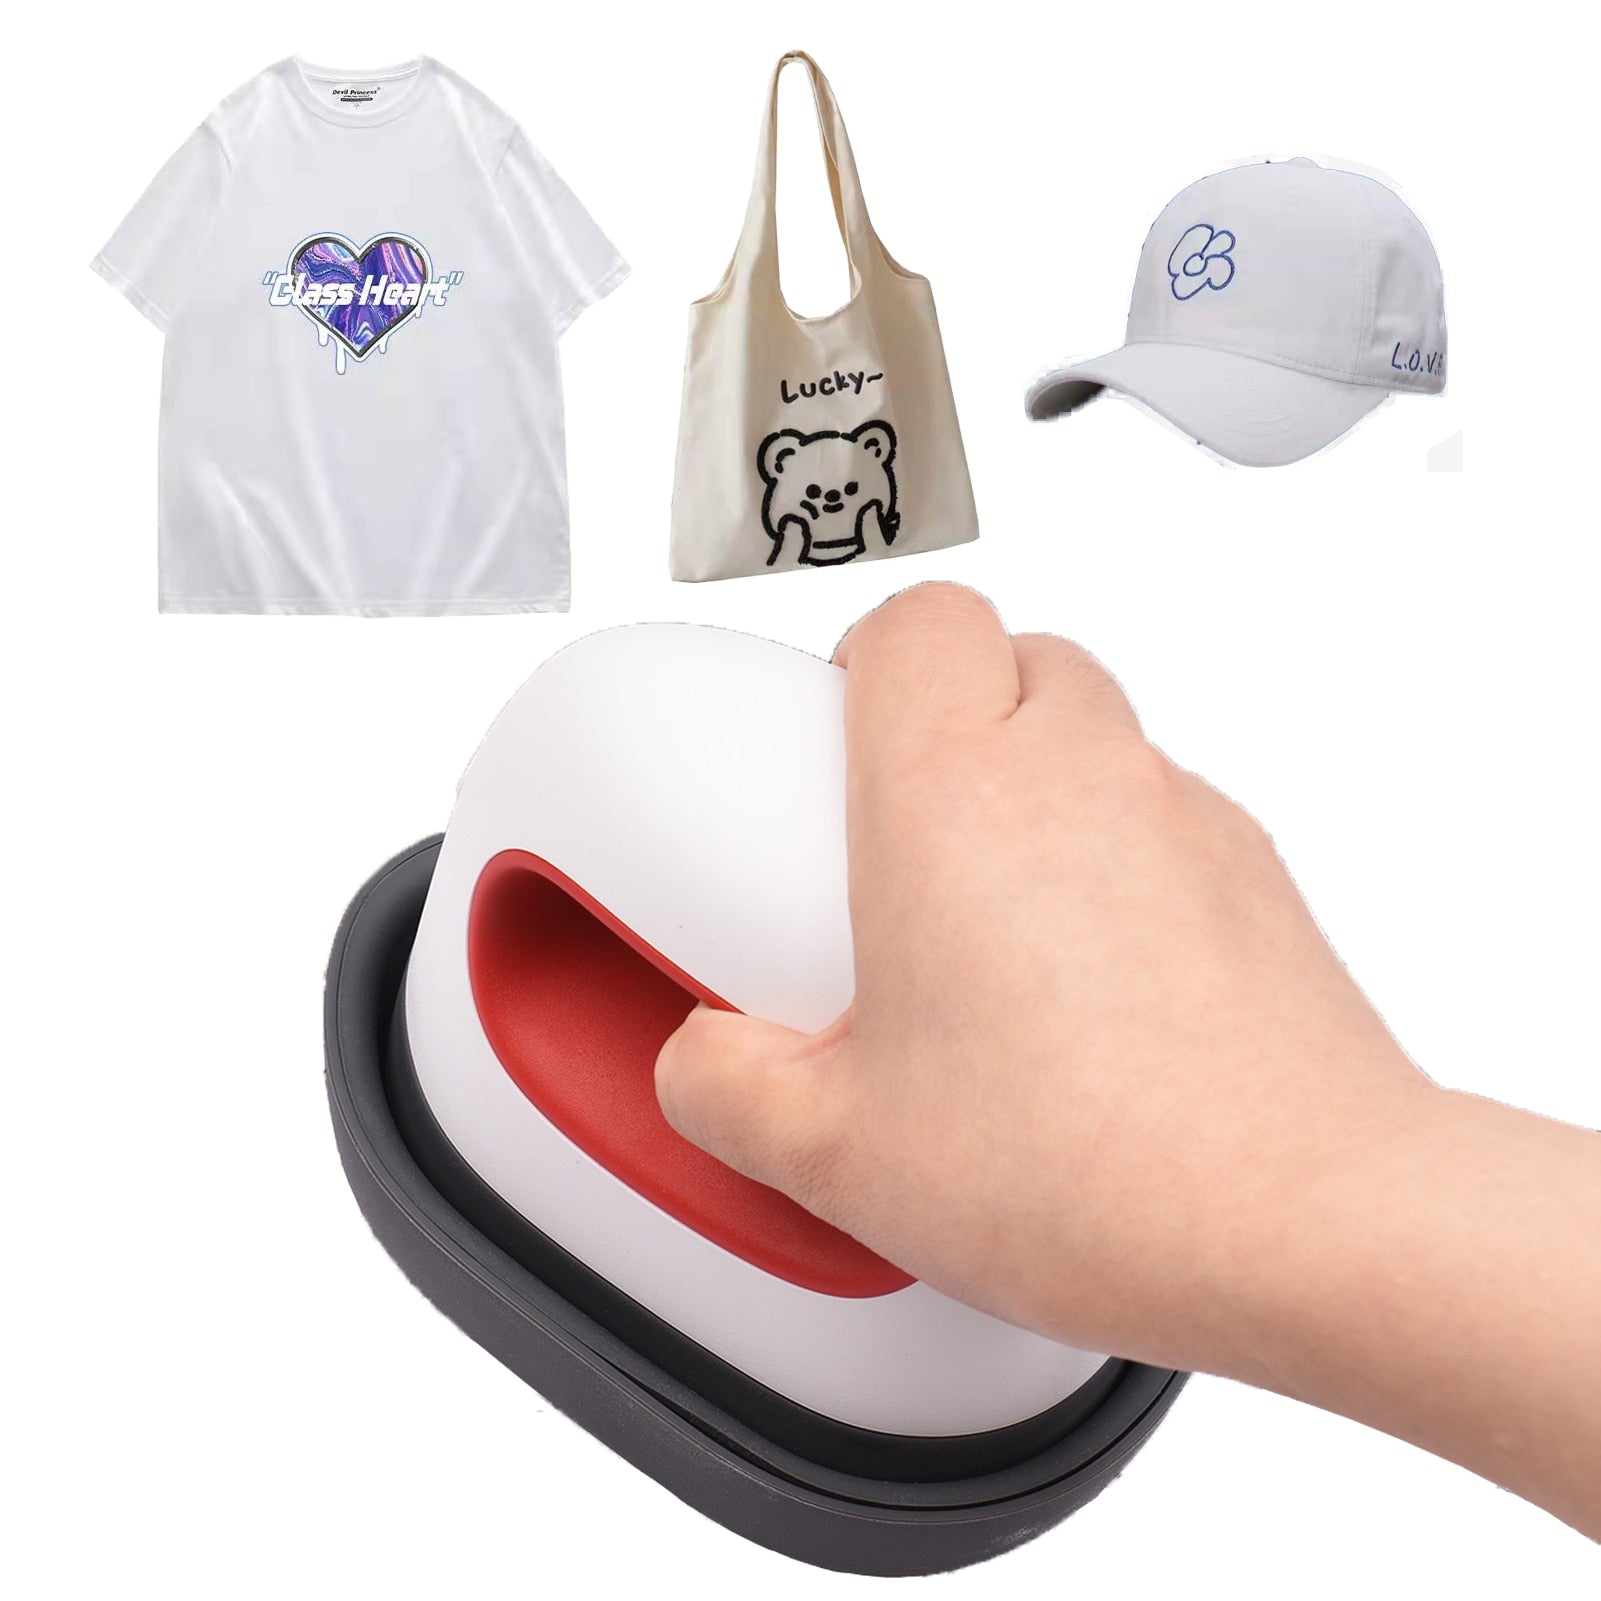 Portable Mini Heat Press Machine T-Shirt Printing DIY Easy Heating Transfer Press Iron Machines for Clothes Bags Hats - OZN Shopping